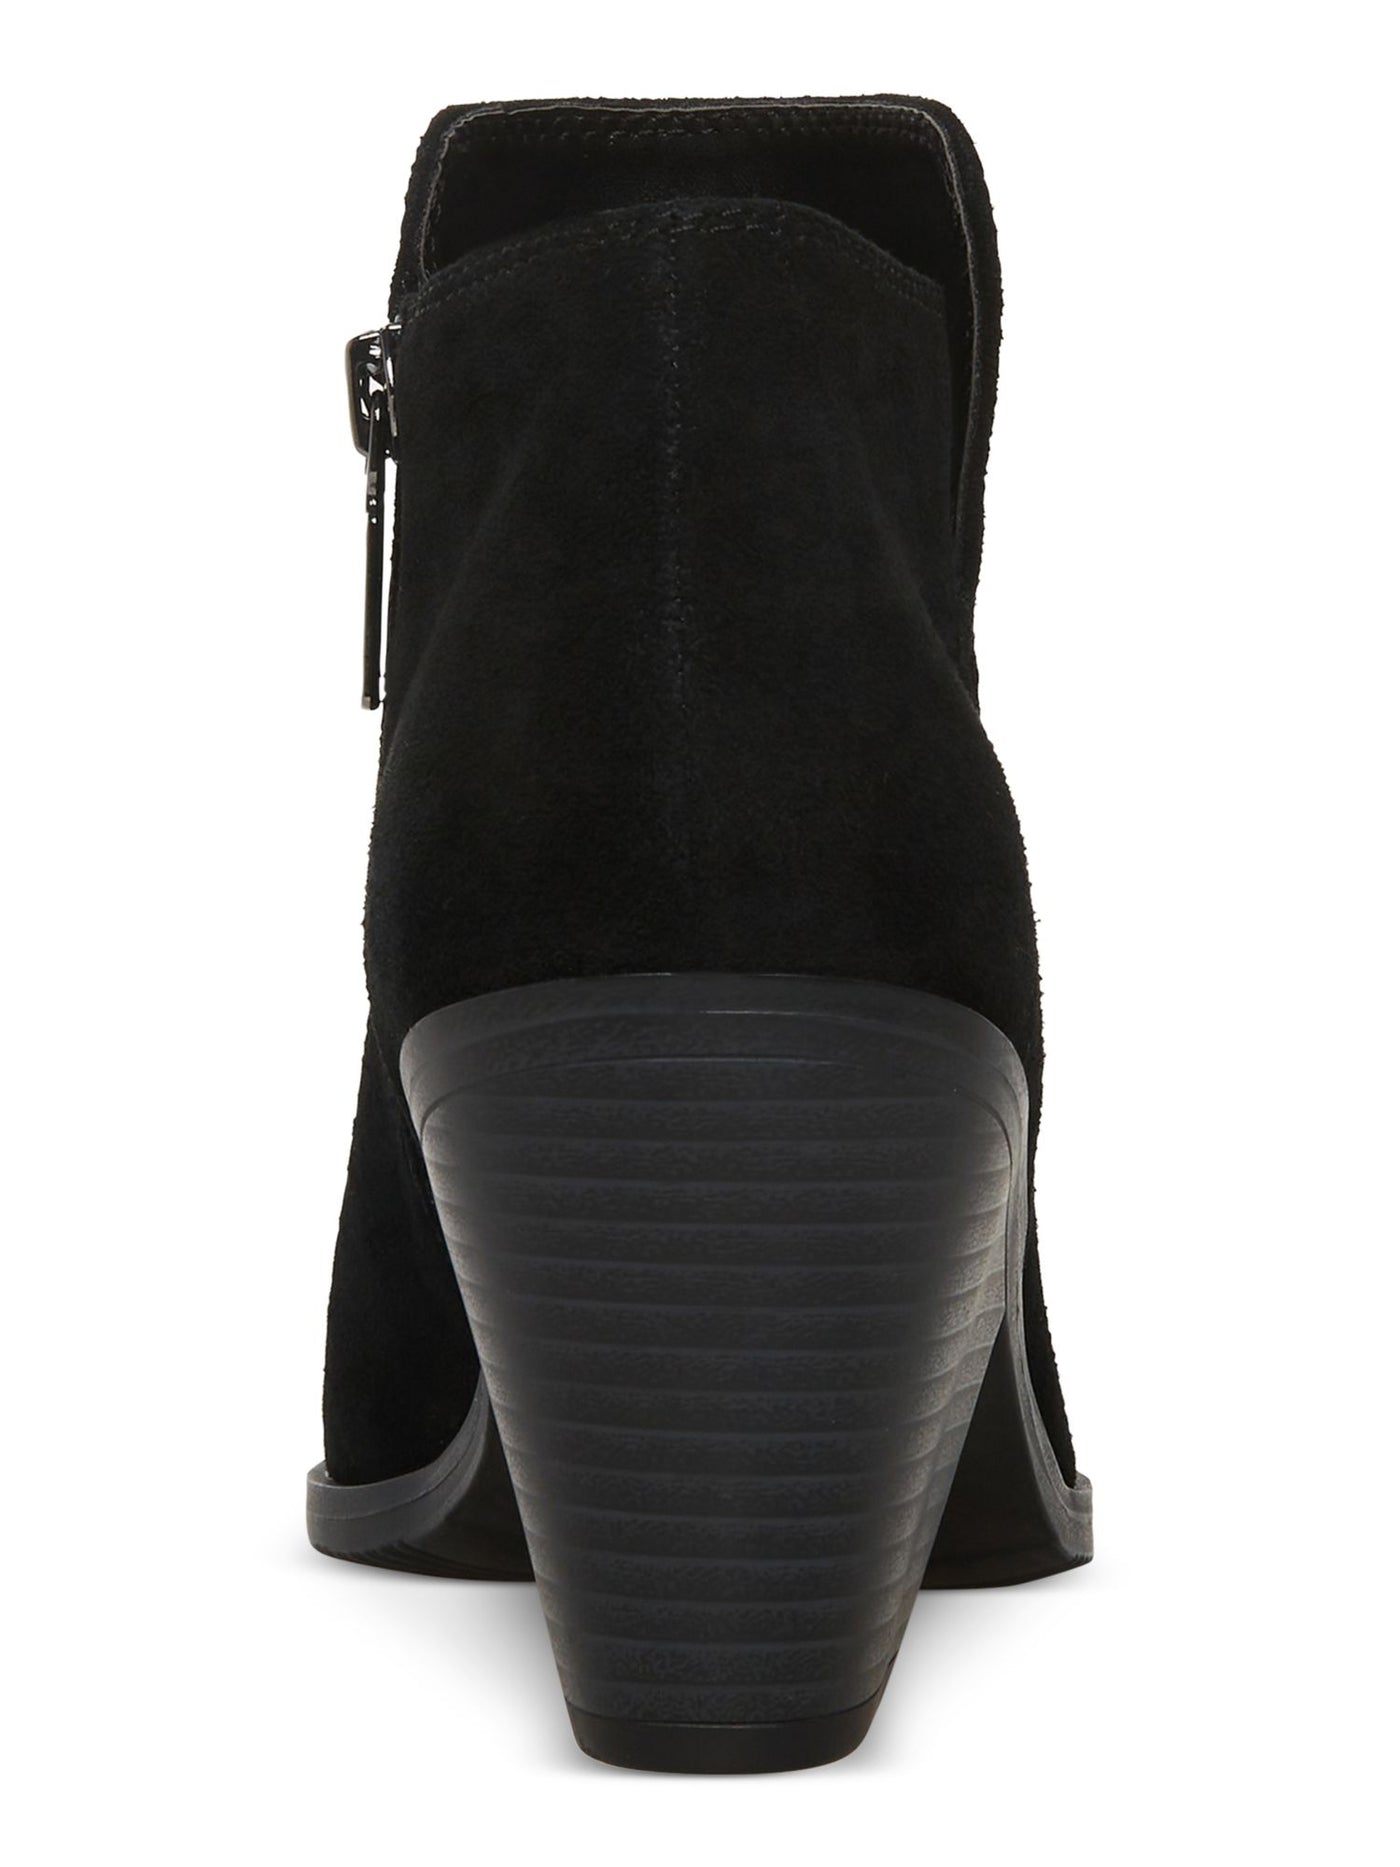 AQUA COLLEGE Womens Black Waterproof Nellie Pointed Toe Stacked Heel Zip-Up Leather Booties 9 M